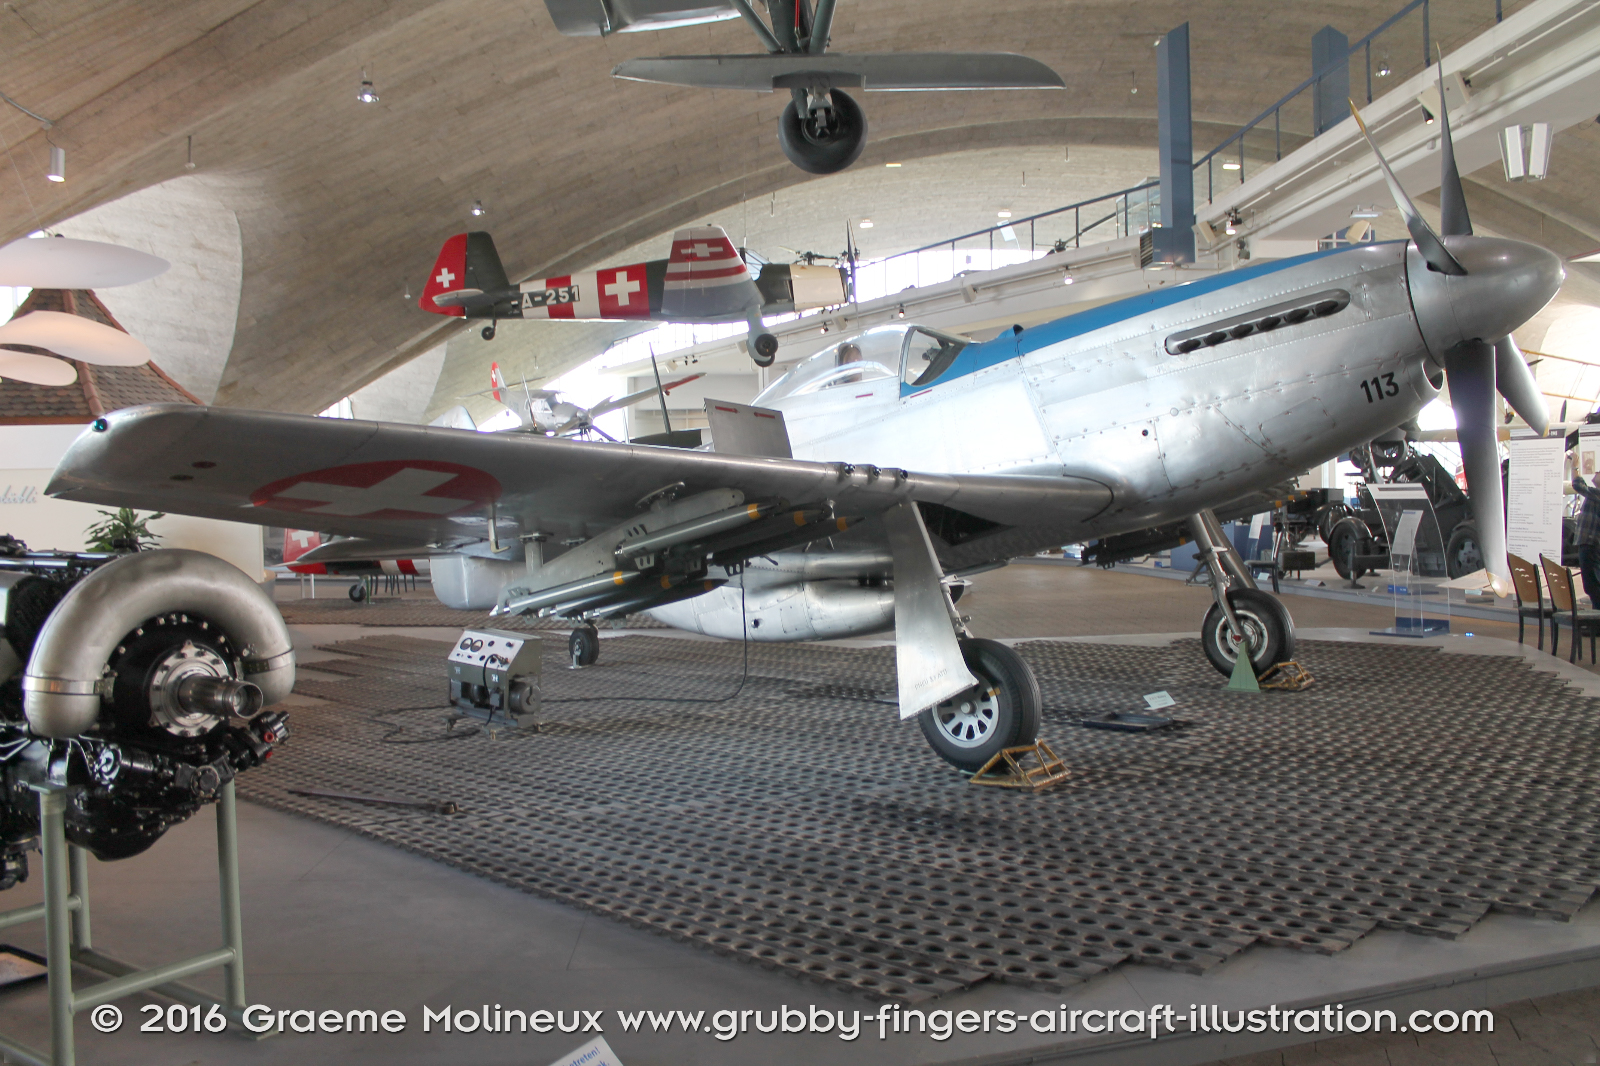 NORTH_AMERICAN_P-51D_Mustang_Walkaround_J-2113_Swiss_Air_Force_Museum_2015_11_GrubbyFingers